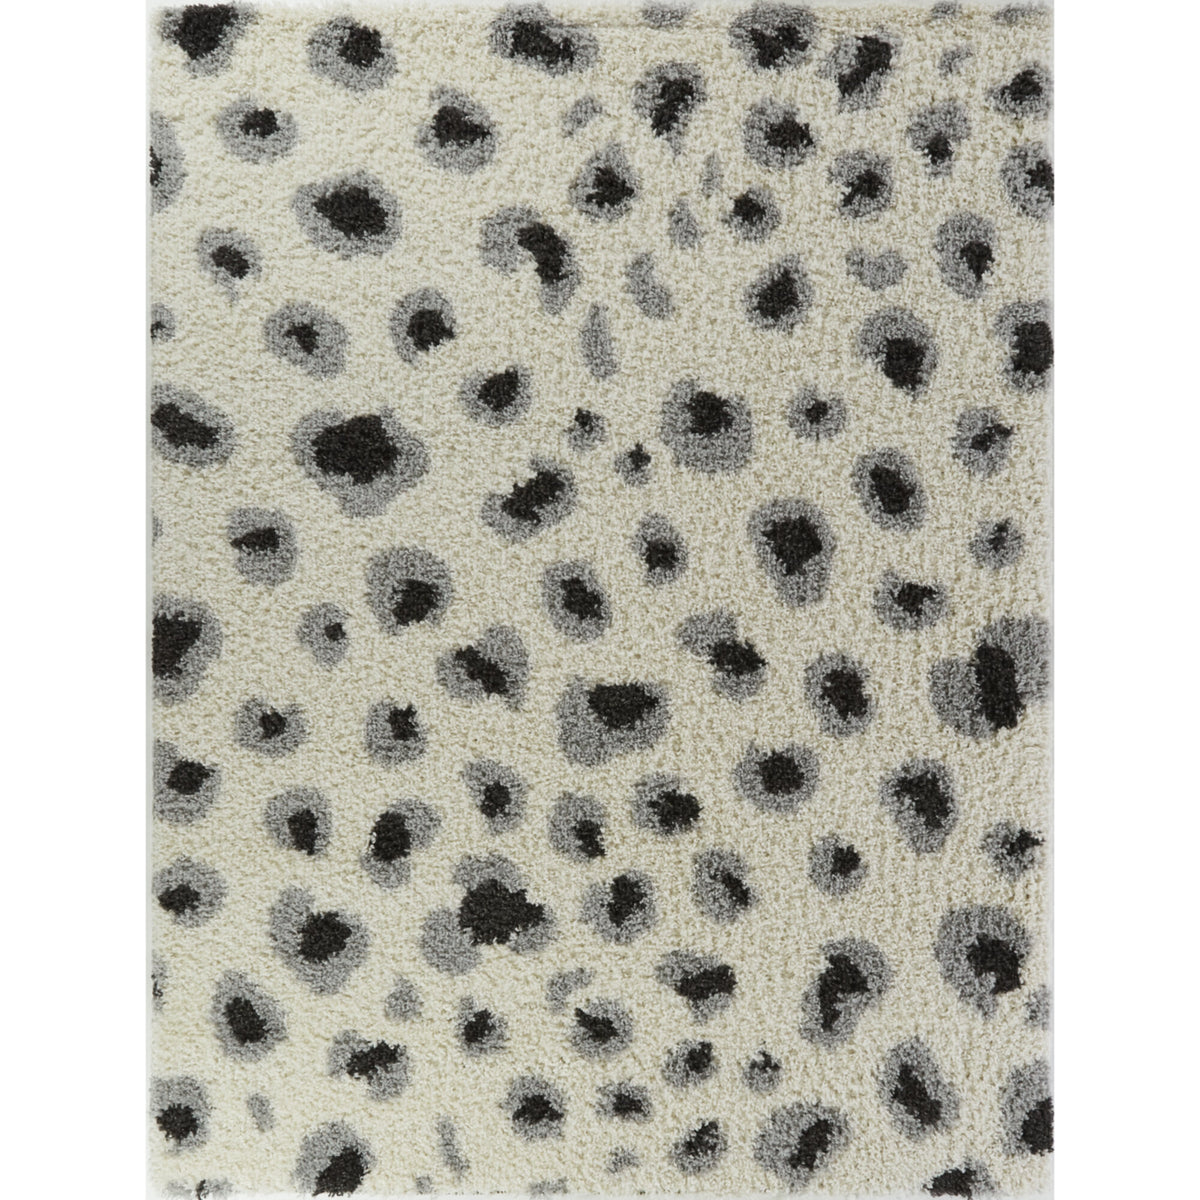 Asaro Leopard Print Shag Area Rug